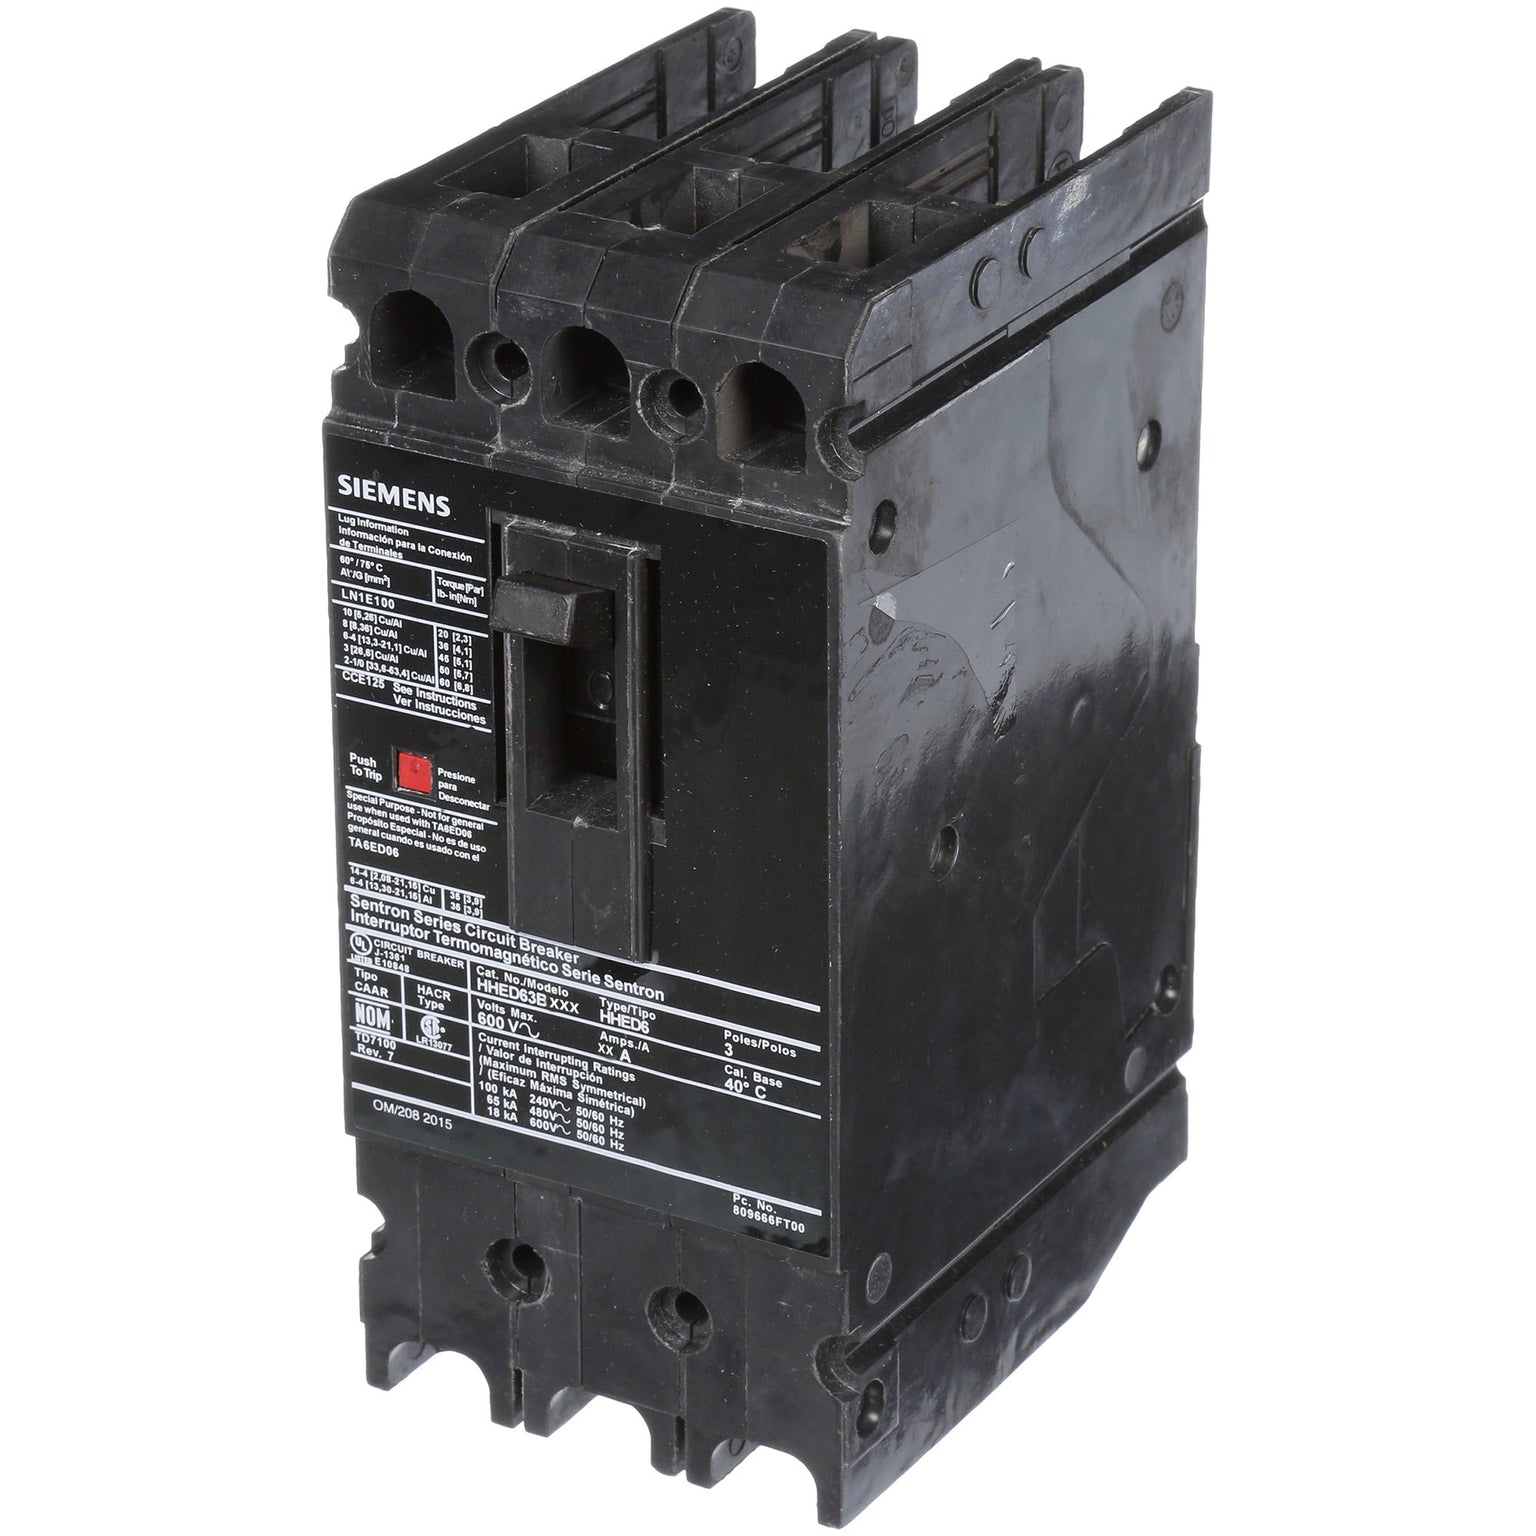 HHED63B025L - Siemens - Molded Case Circuit Breaker